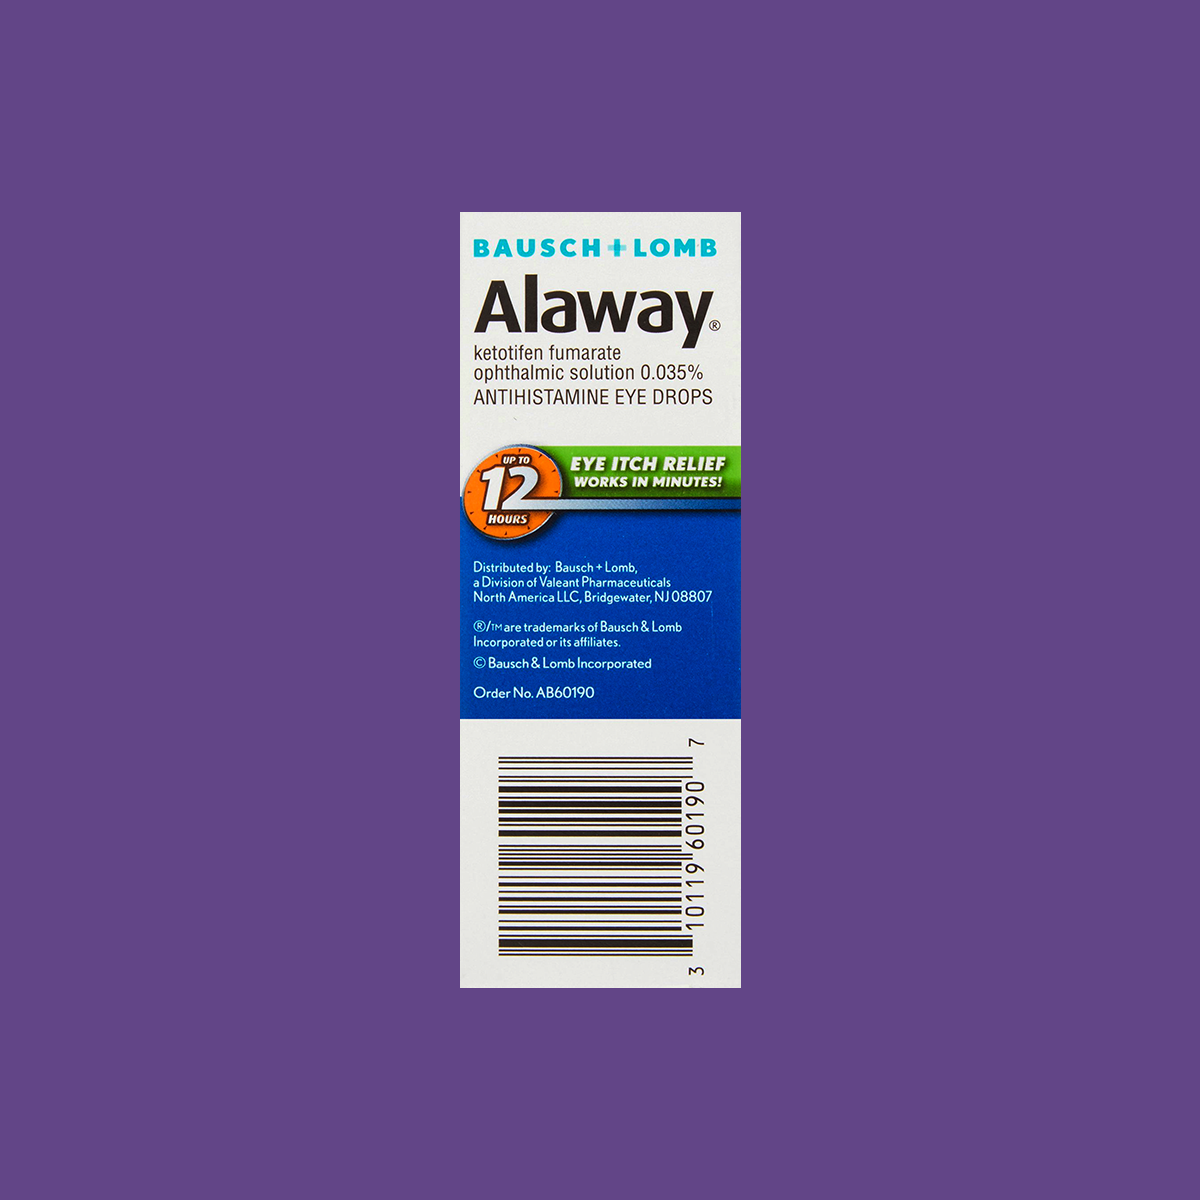 Alaway Antihistamine Allergy Eye Drops (60 Day Supply)